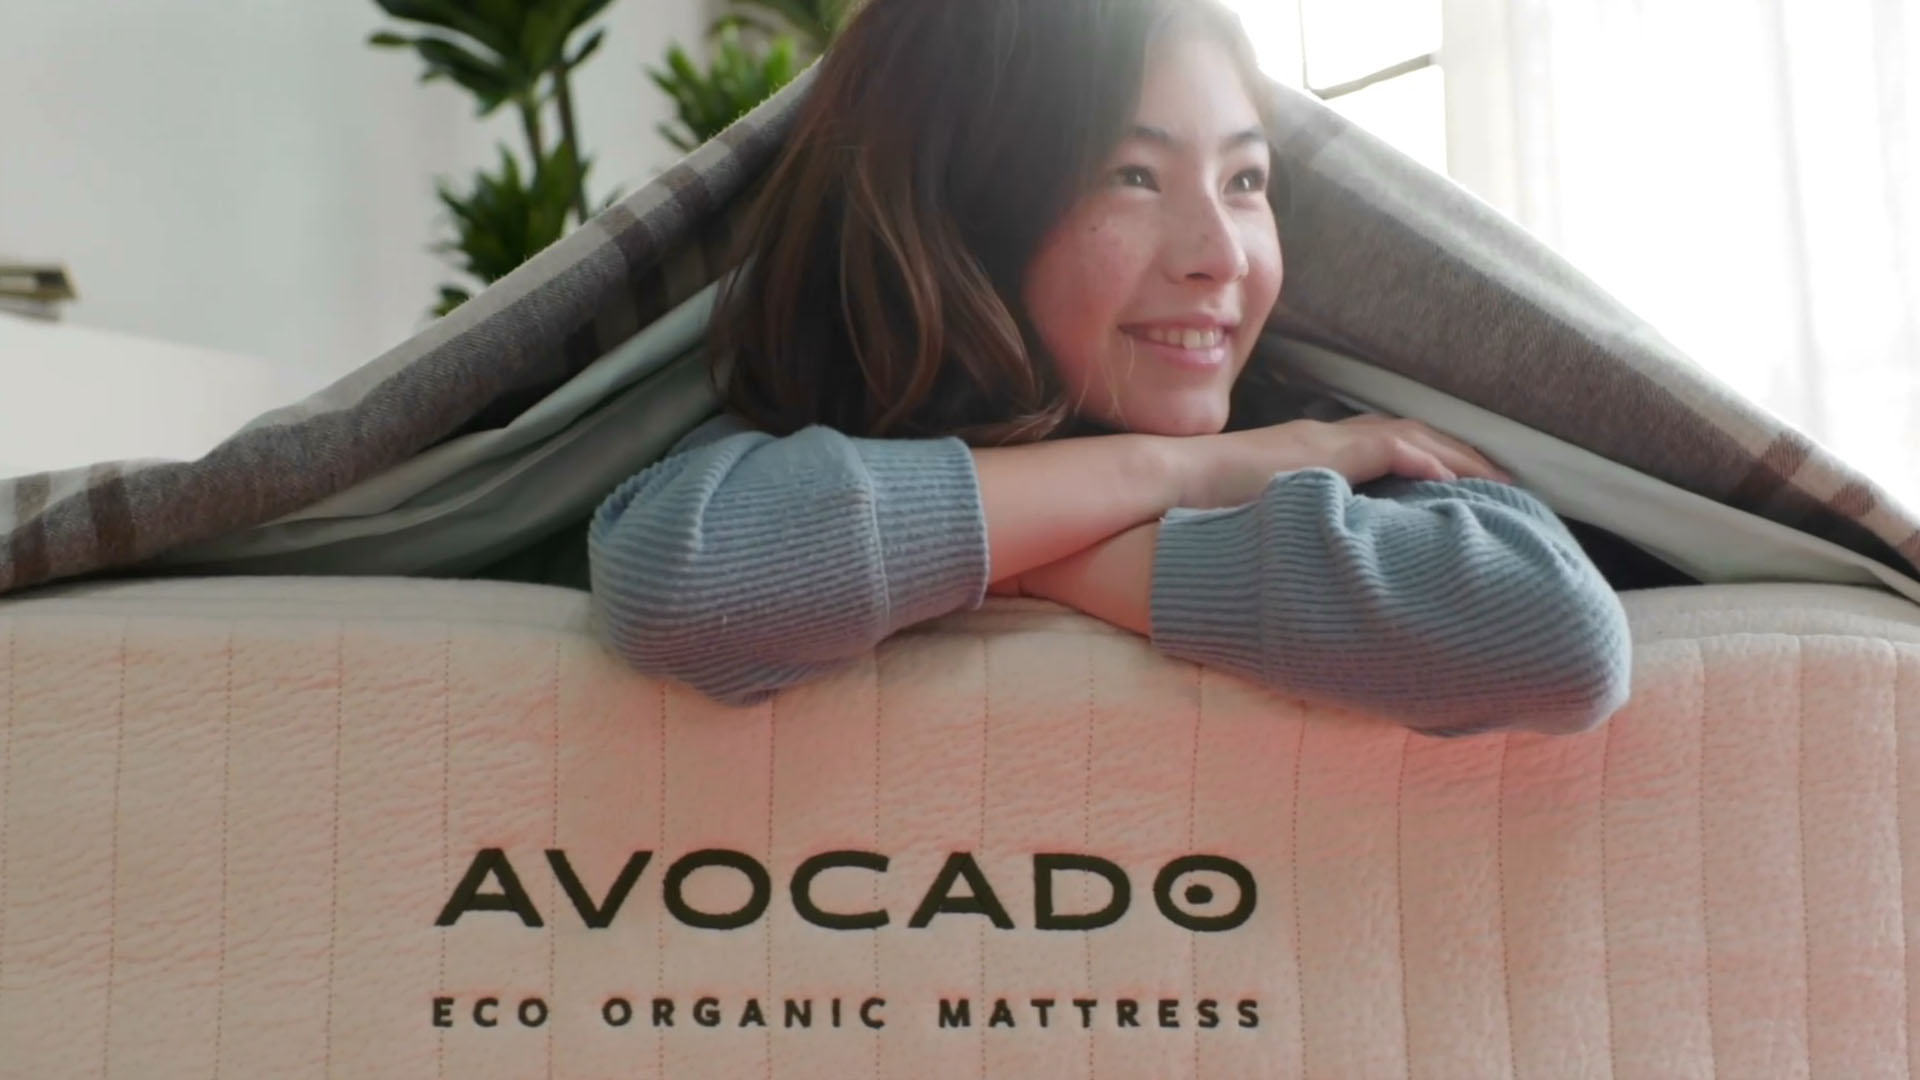 Who sells Avocado mattress near me in Malden